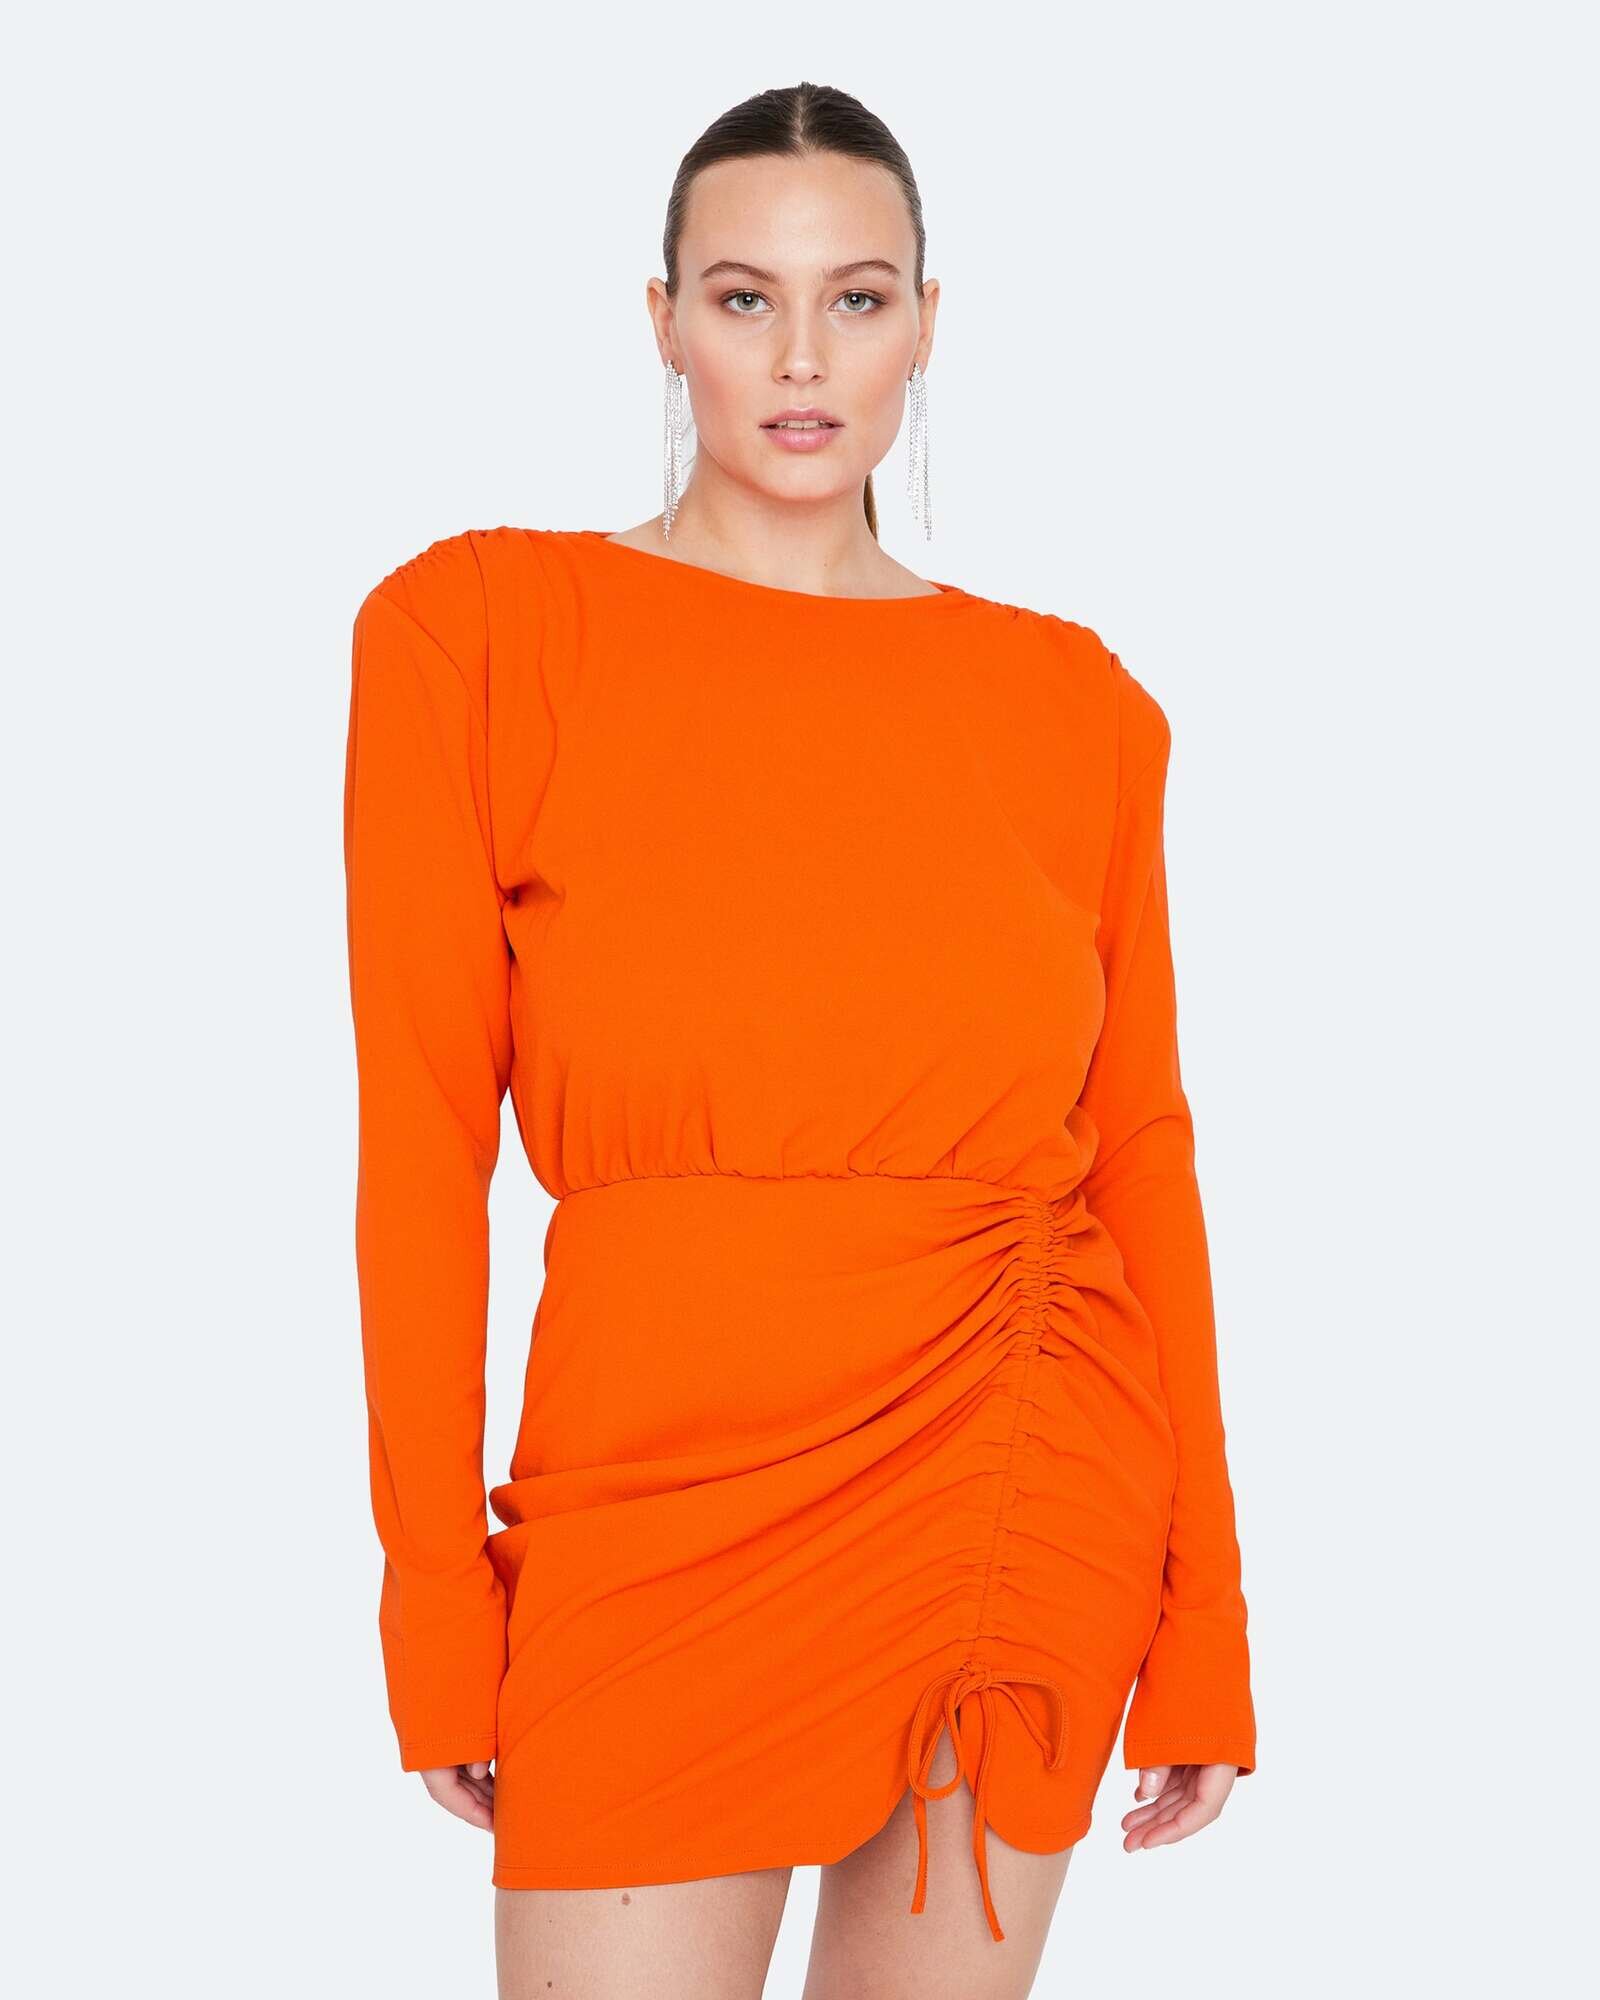 Oransje kjole med snøring